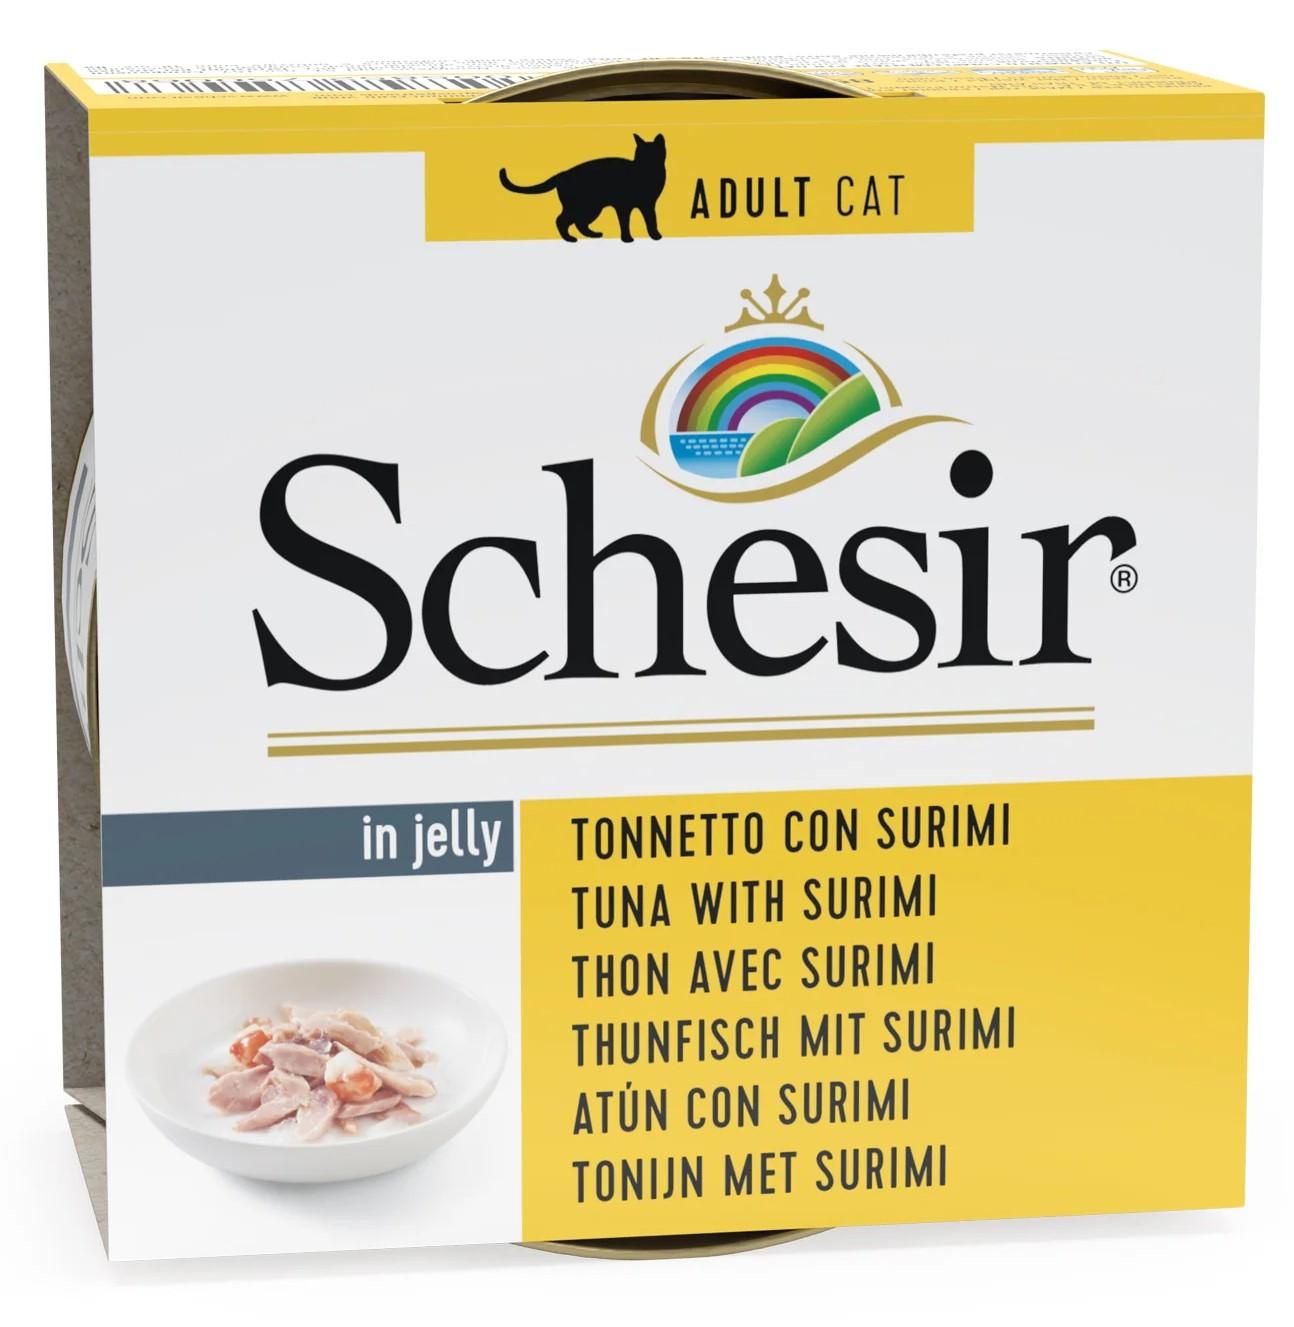 Schesir Tuna With Surimi in jelly